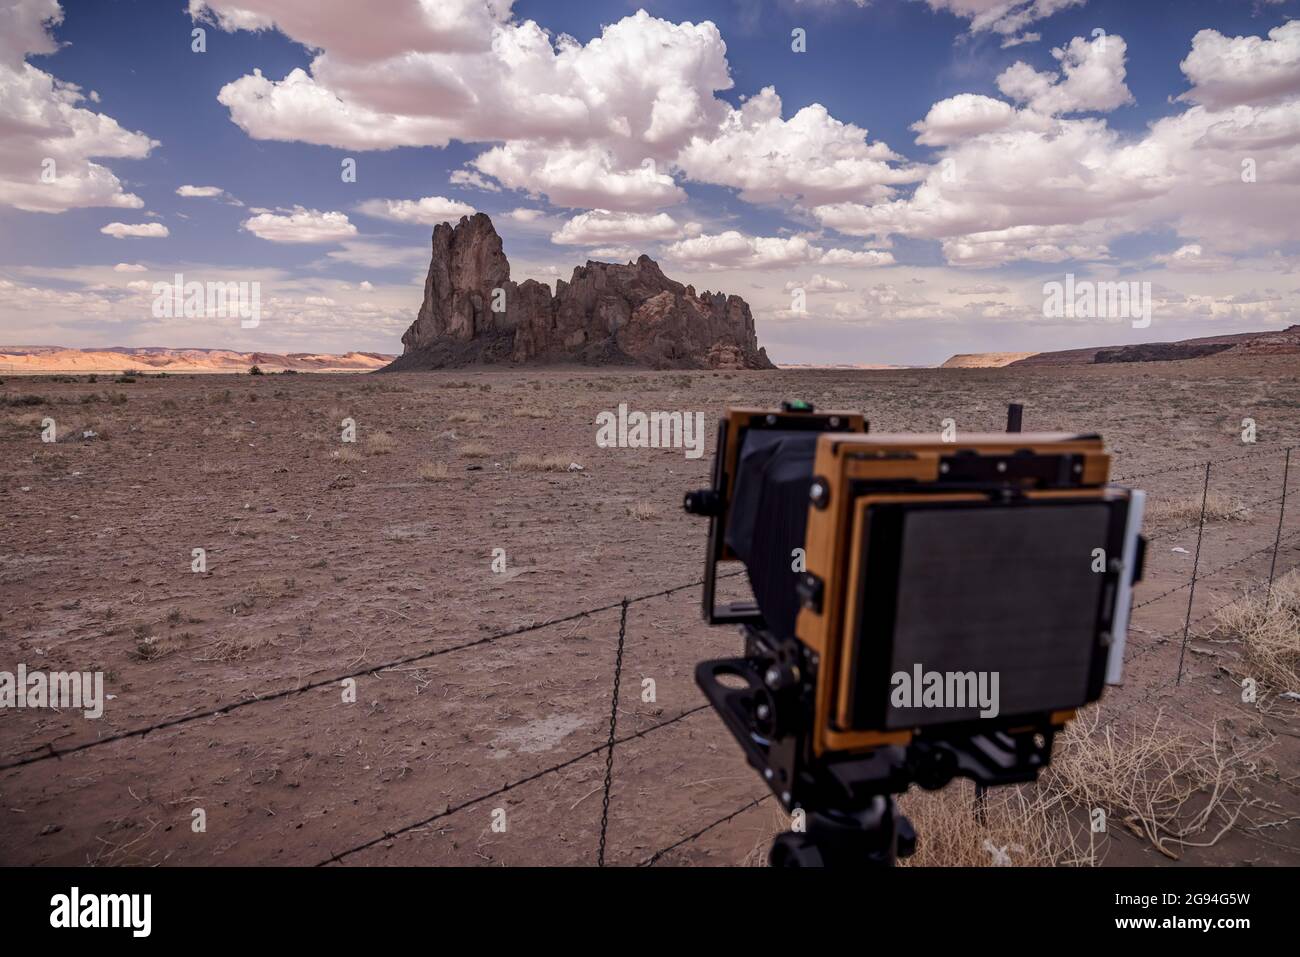 Film camera used to photograph near Monument Valley, Arizona. Stock Photo